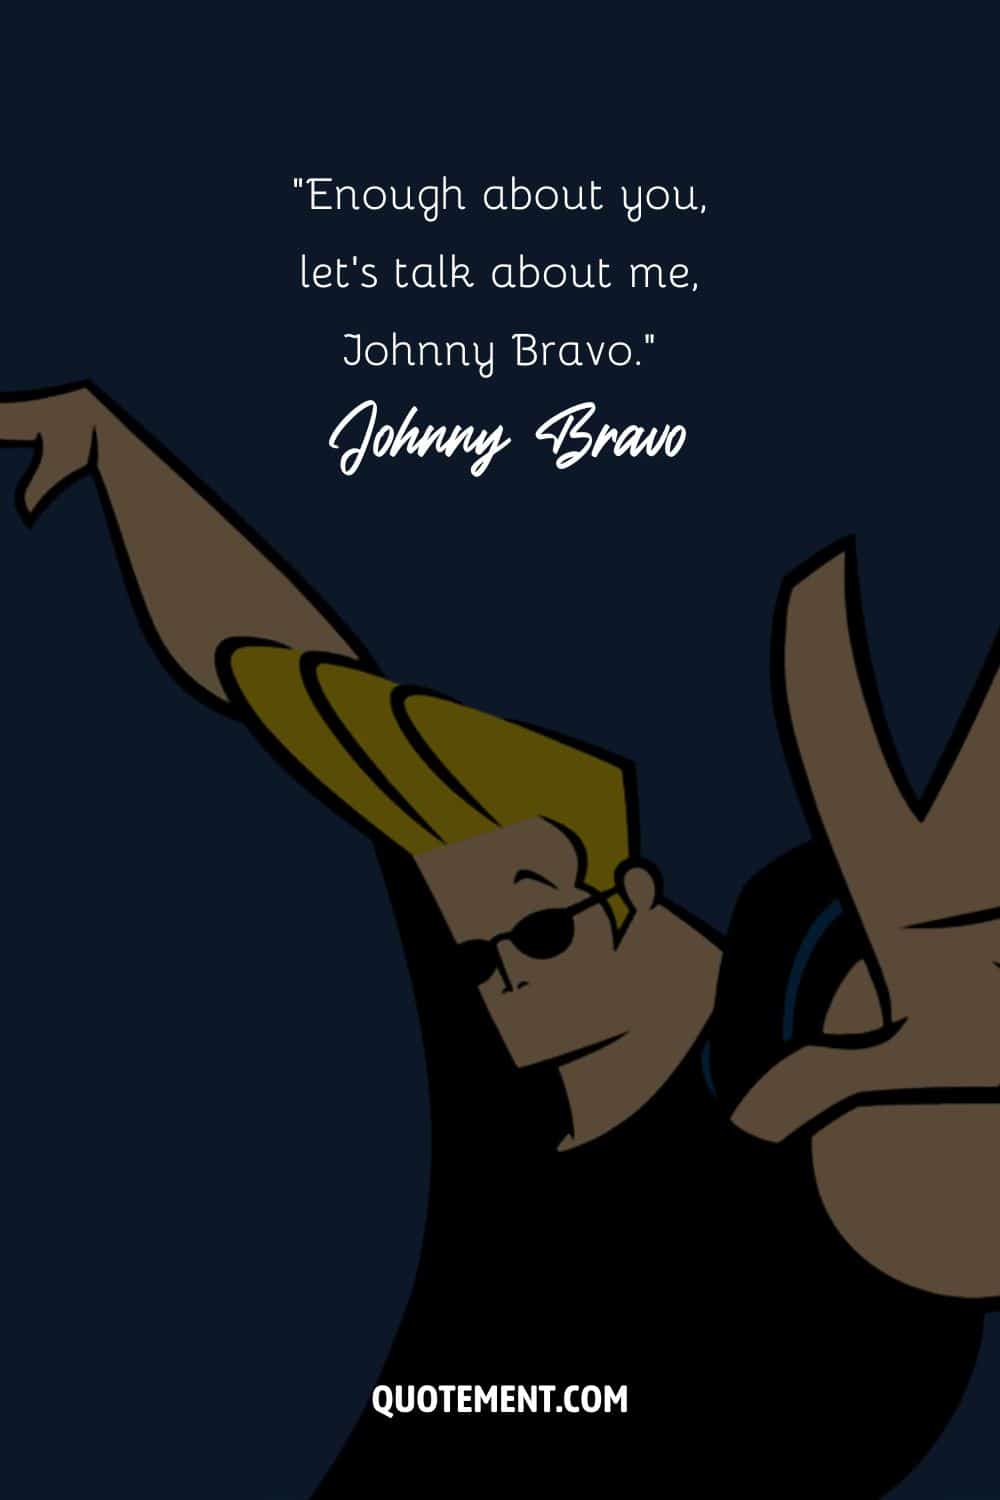 Johnny Bravo with his hands raised
